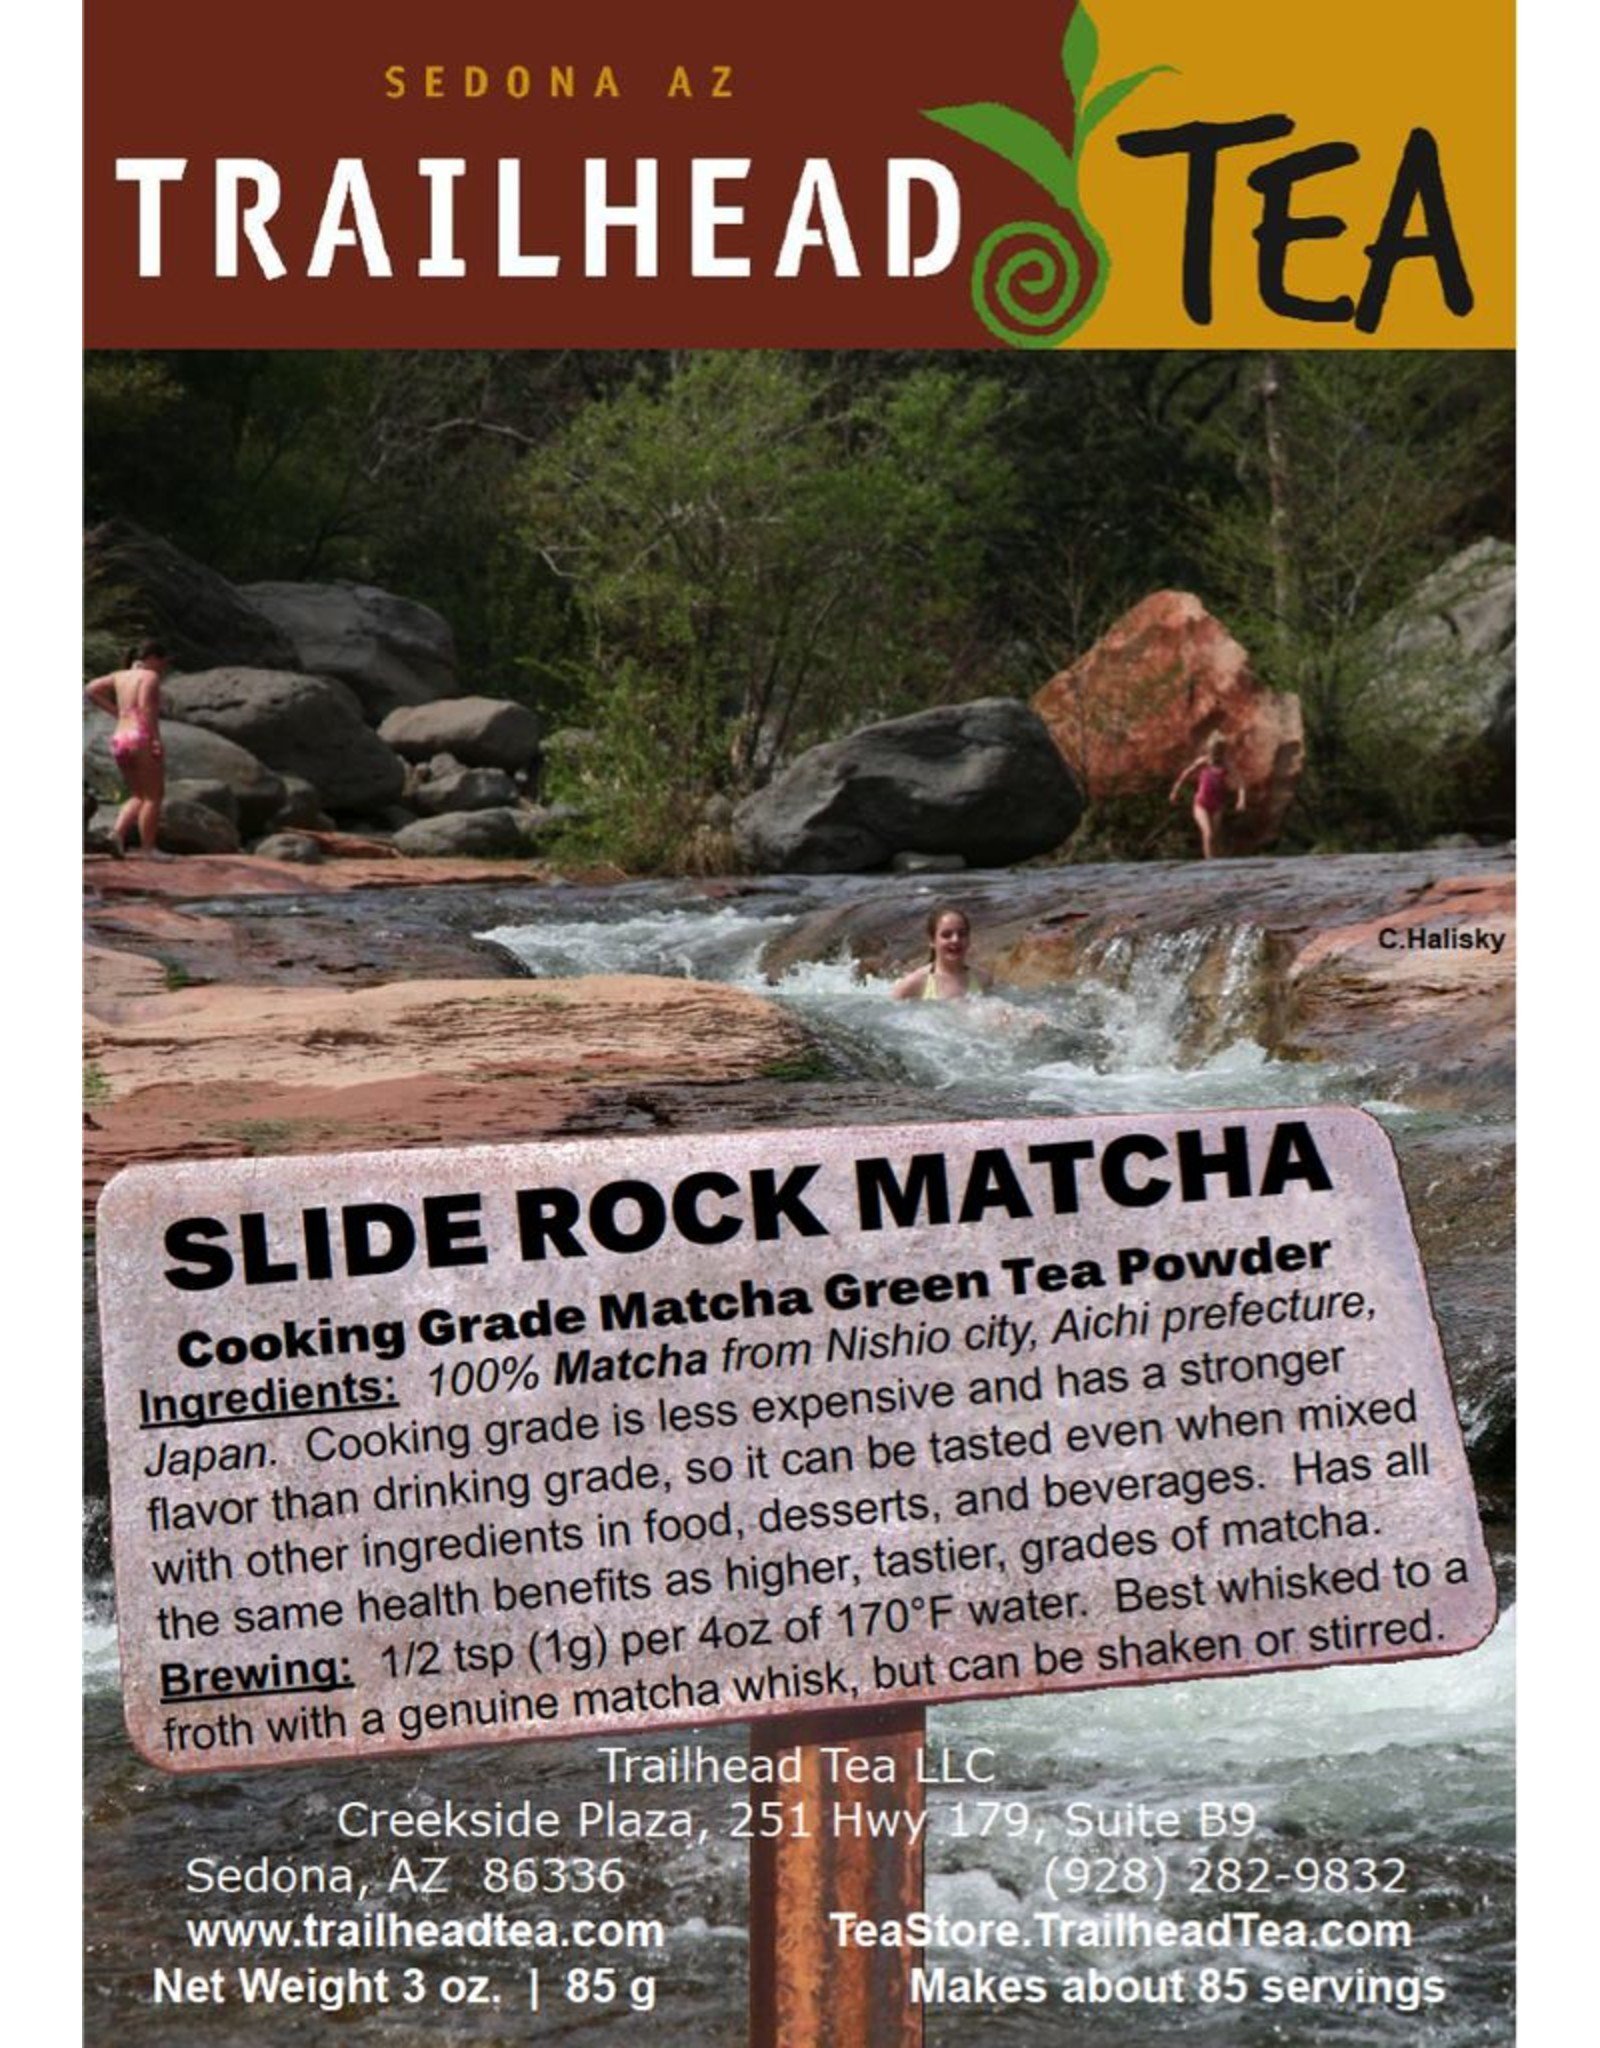 Tea from Japan Slide Rock Matcha (Cooking Grade)